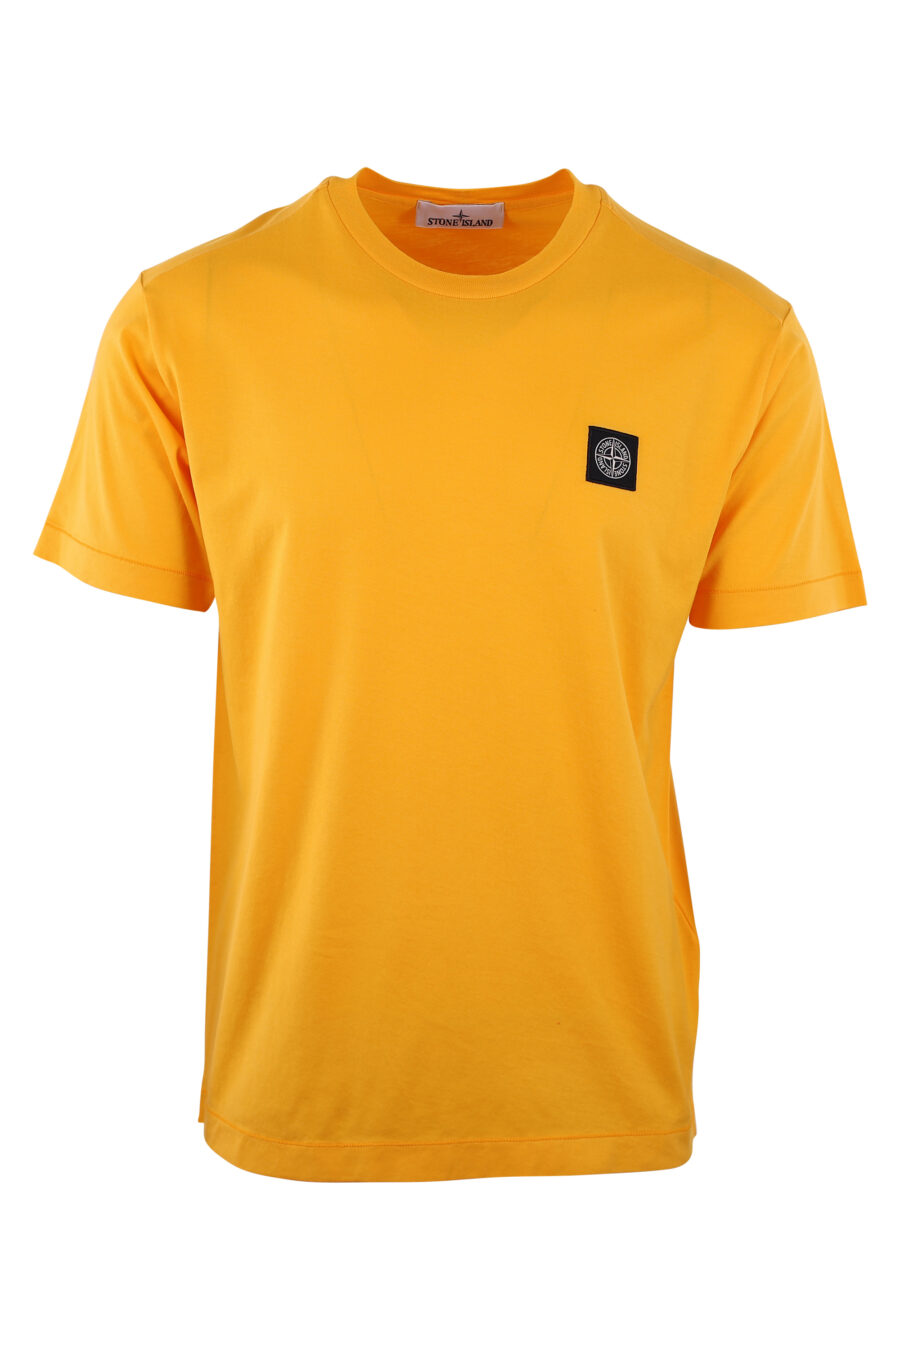 Camiseta amarilla con logo parche - IMG 3136